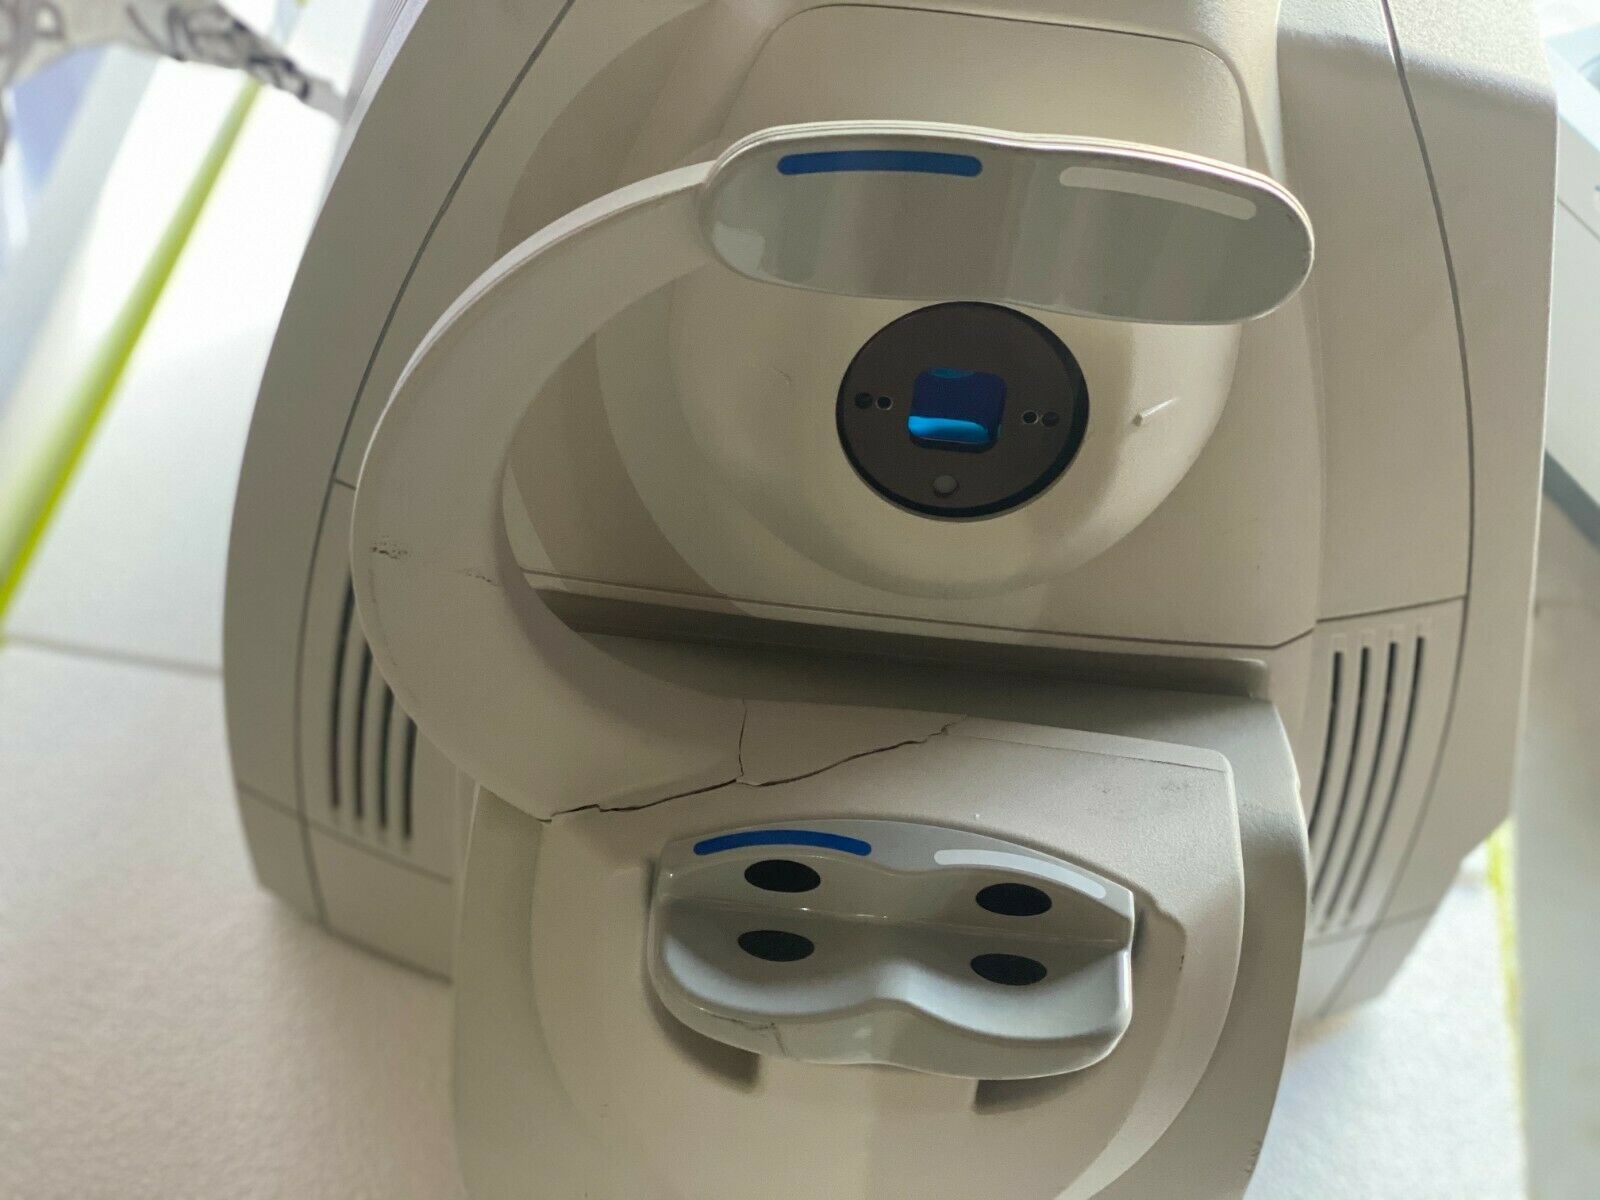 Carl  Zeiss 1000 Visante OCT Anterior Segment Imaging DIAGNOSTIC ULTRASOUND MACHINES FOR SALE